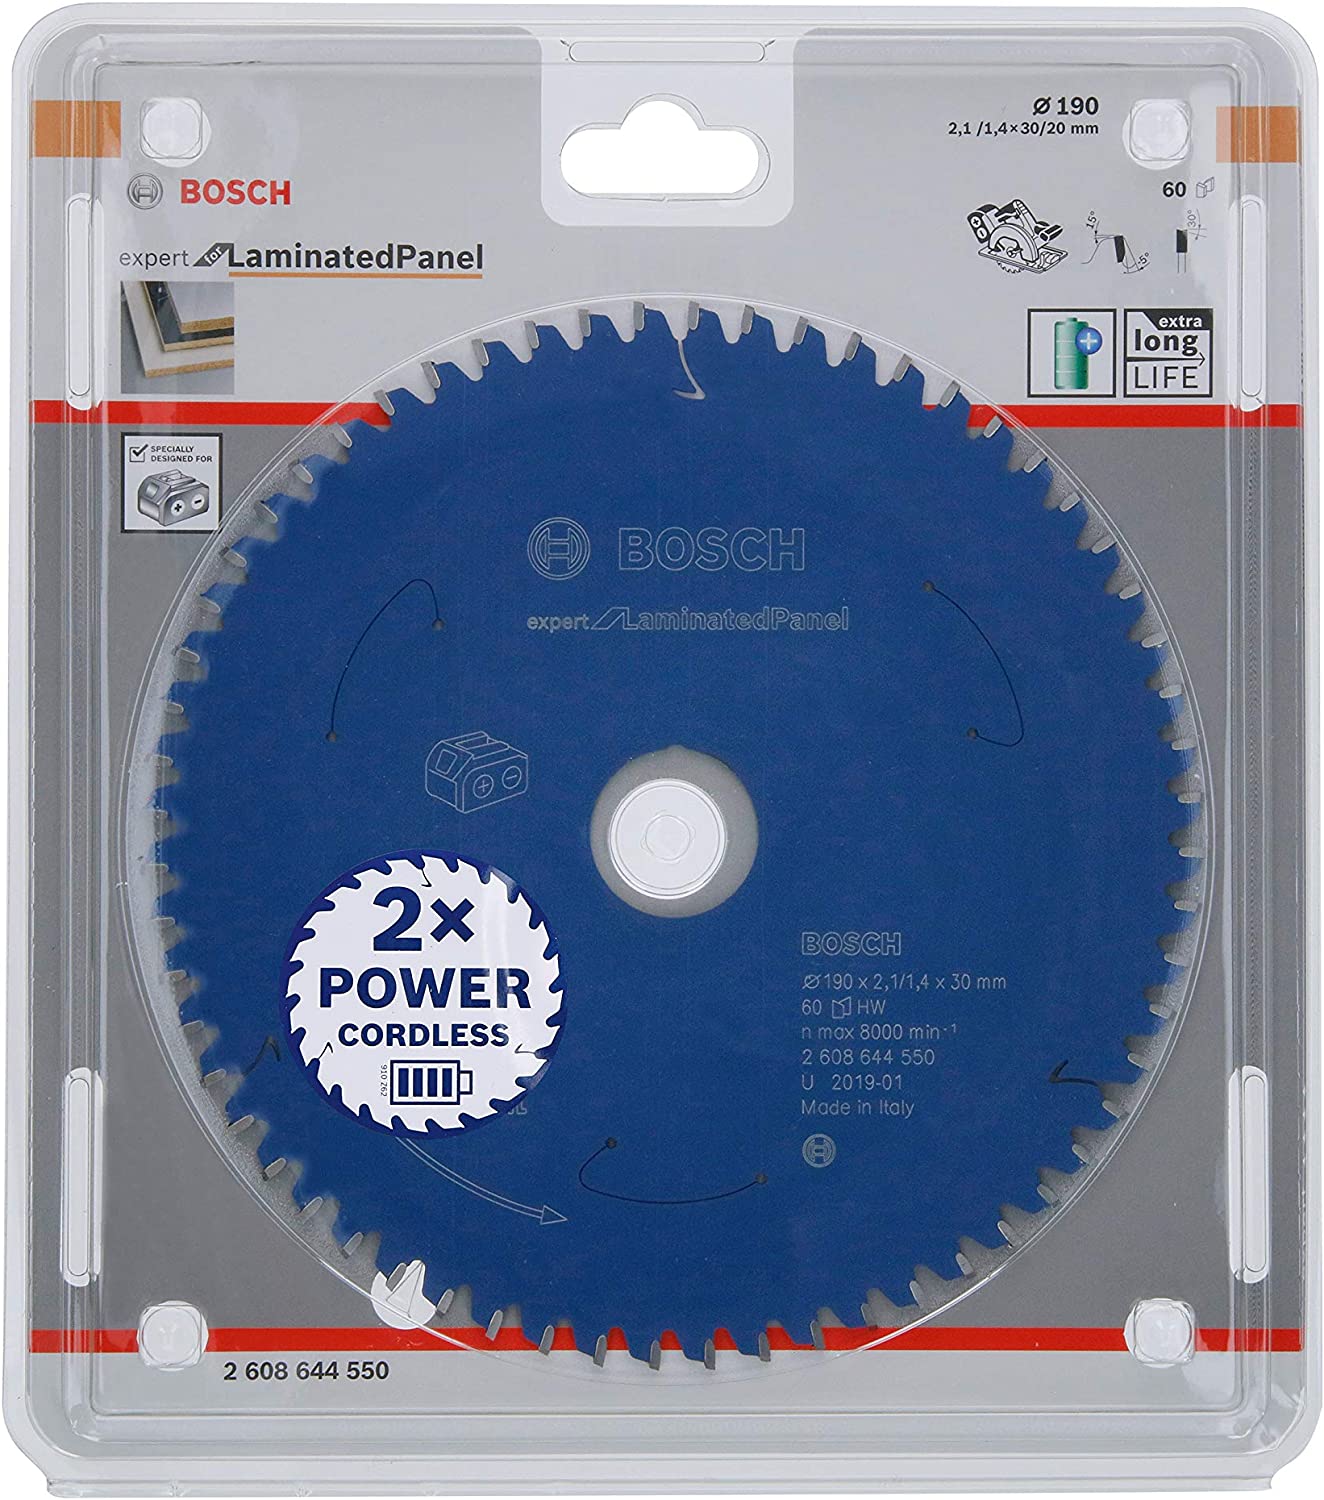 Bosch circular saw blade Expert for Laminated Panel, 190mm 2608644550 (3165140957809)